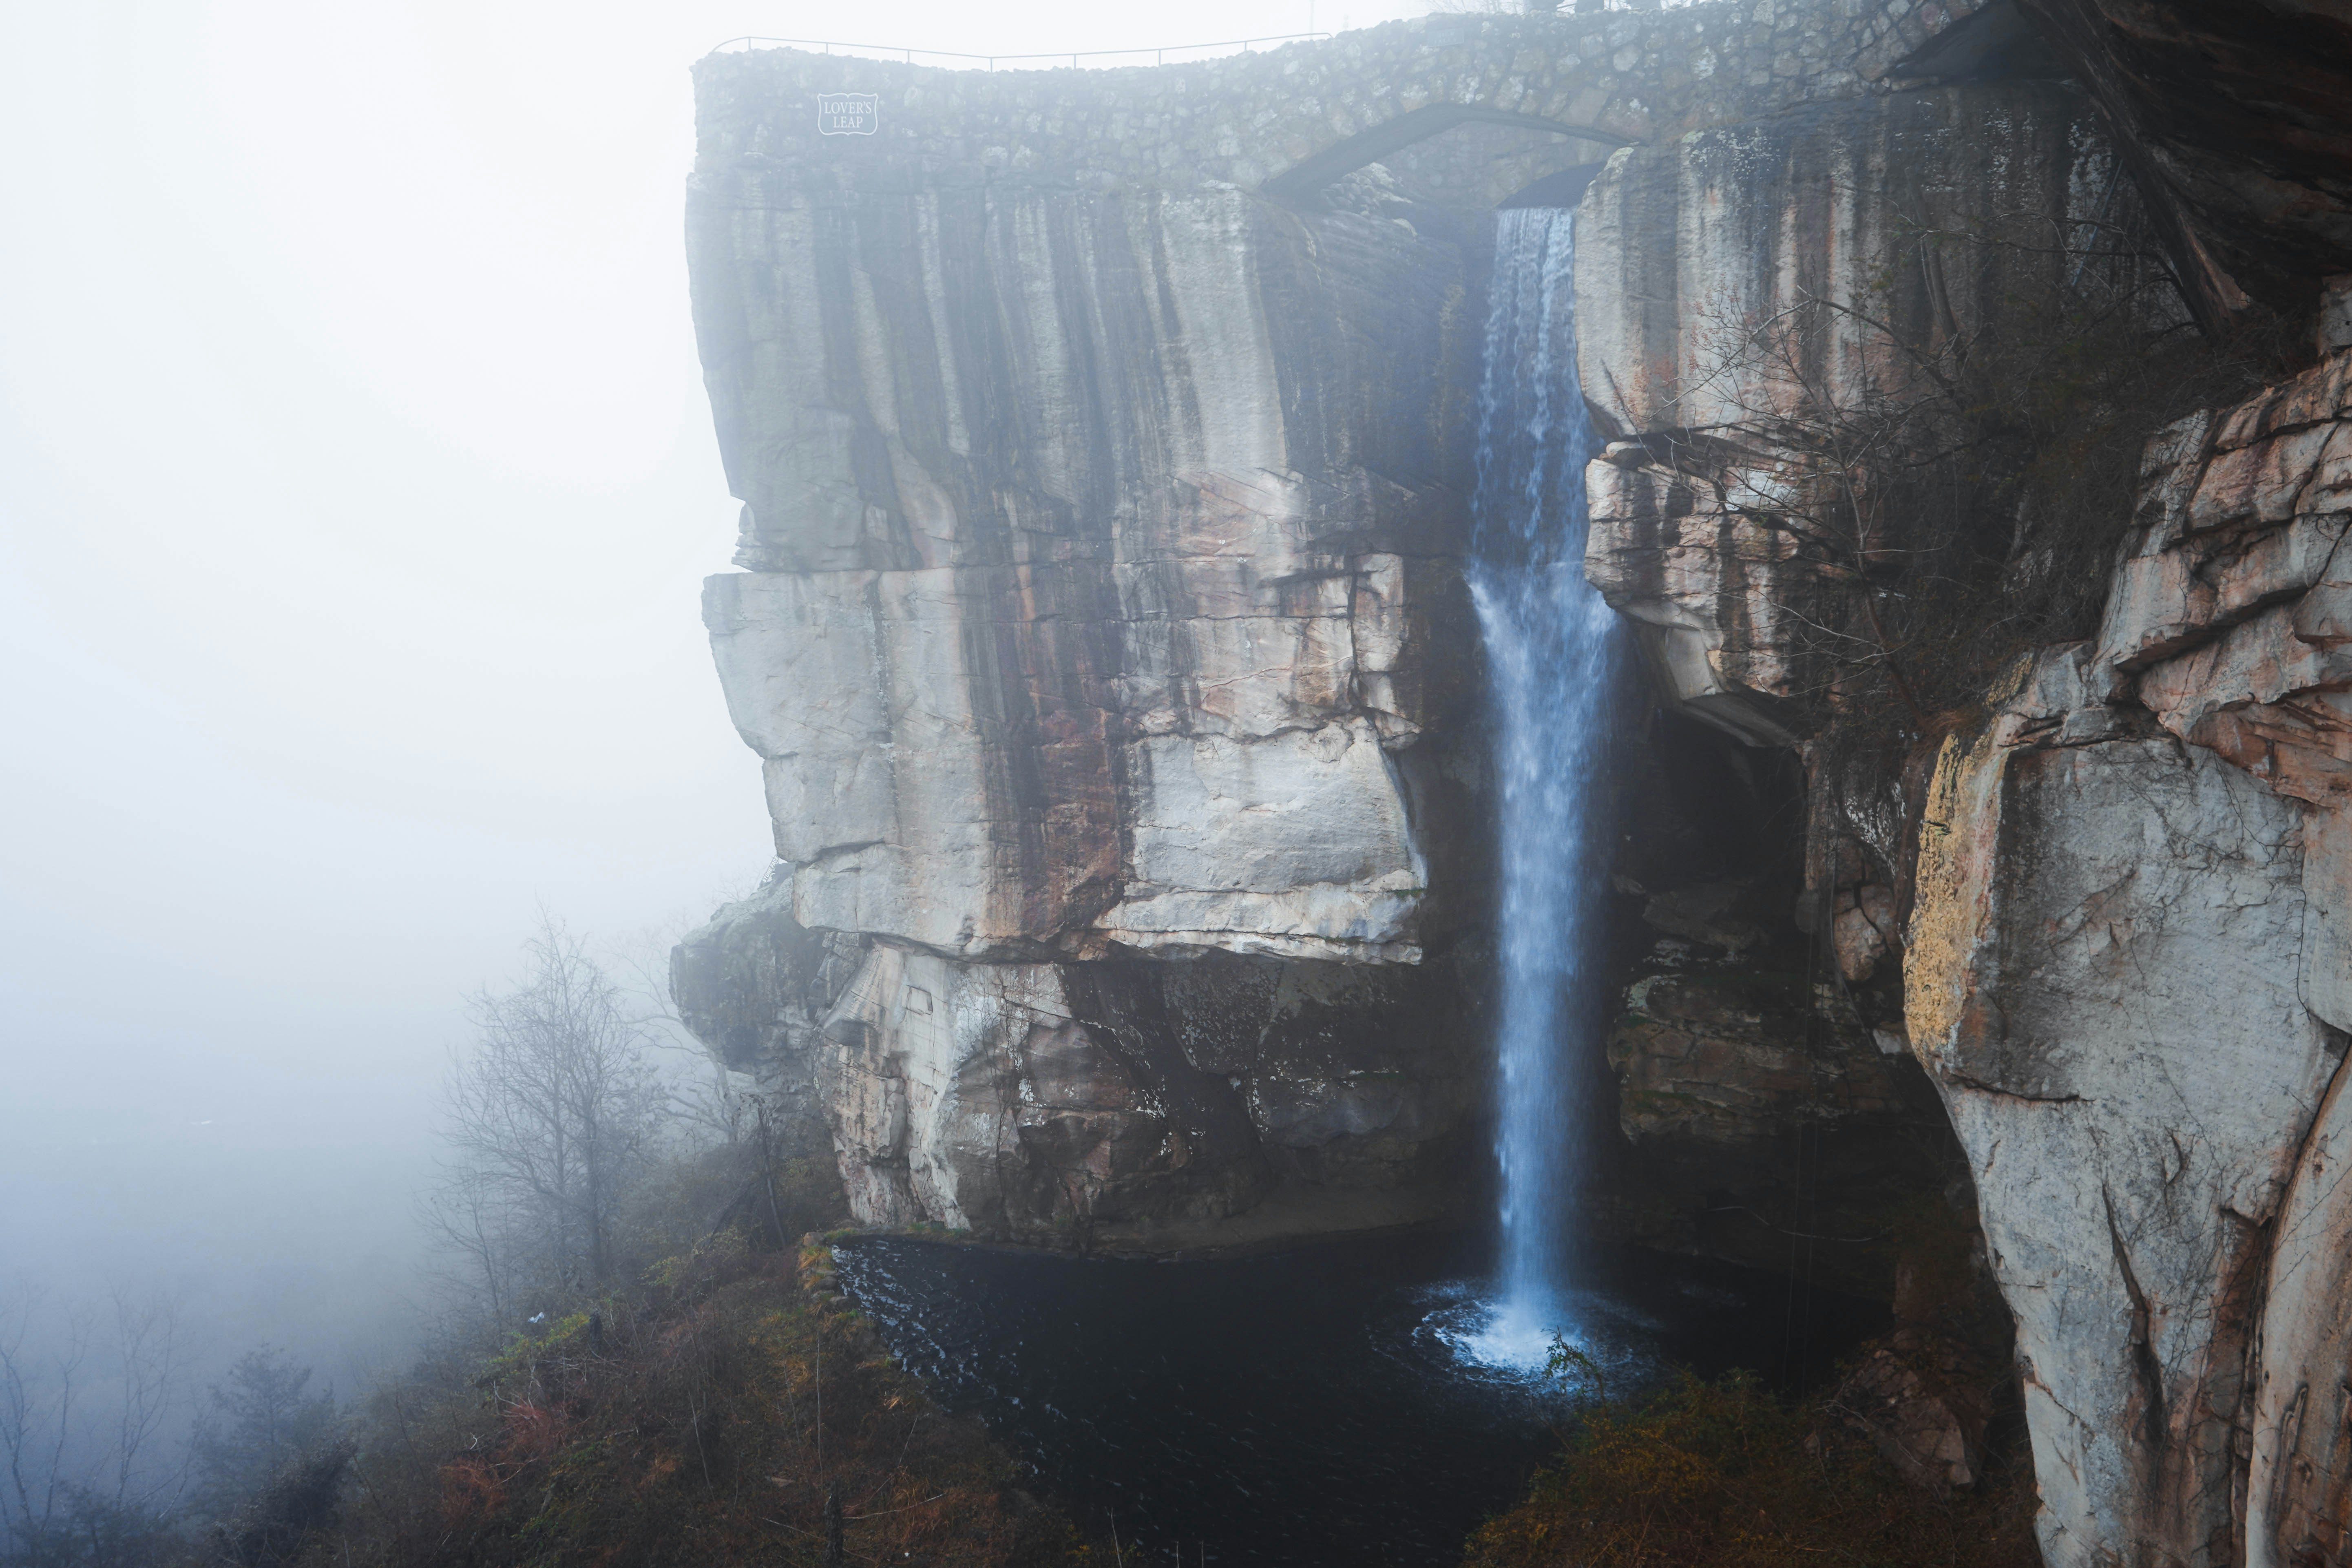 water falls between brown rocky mountain during daytime